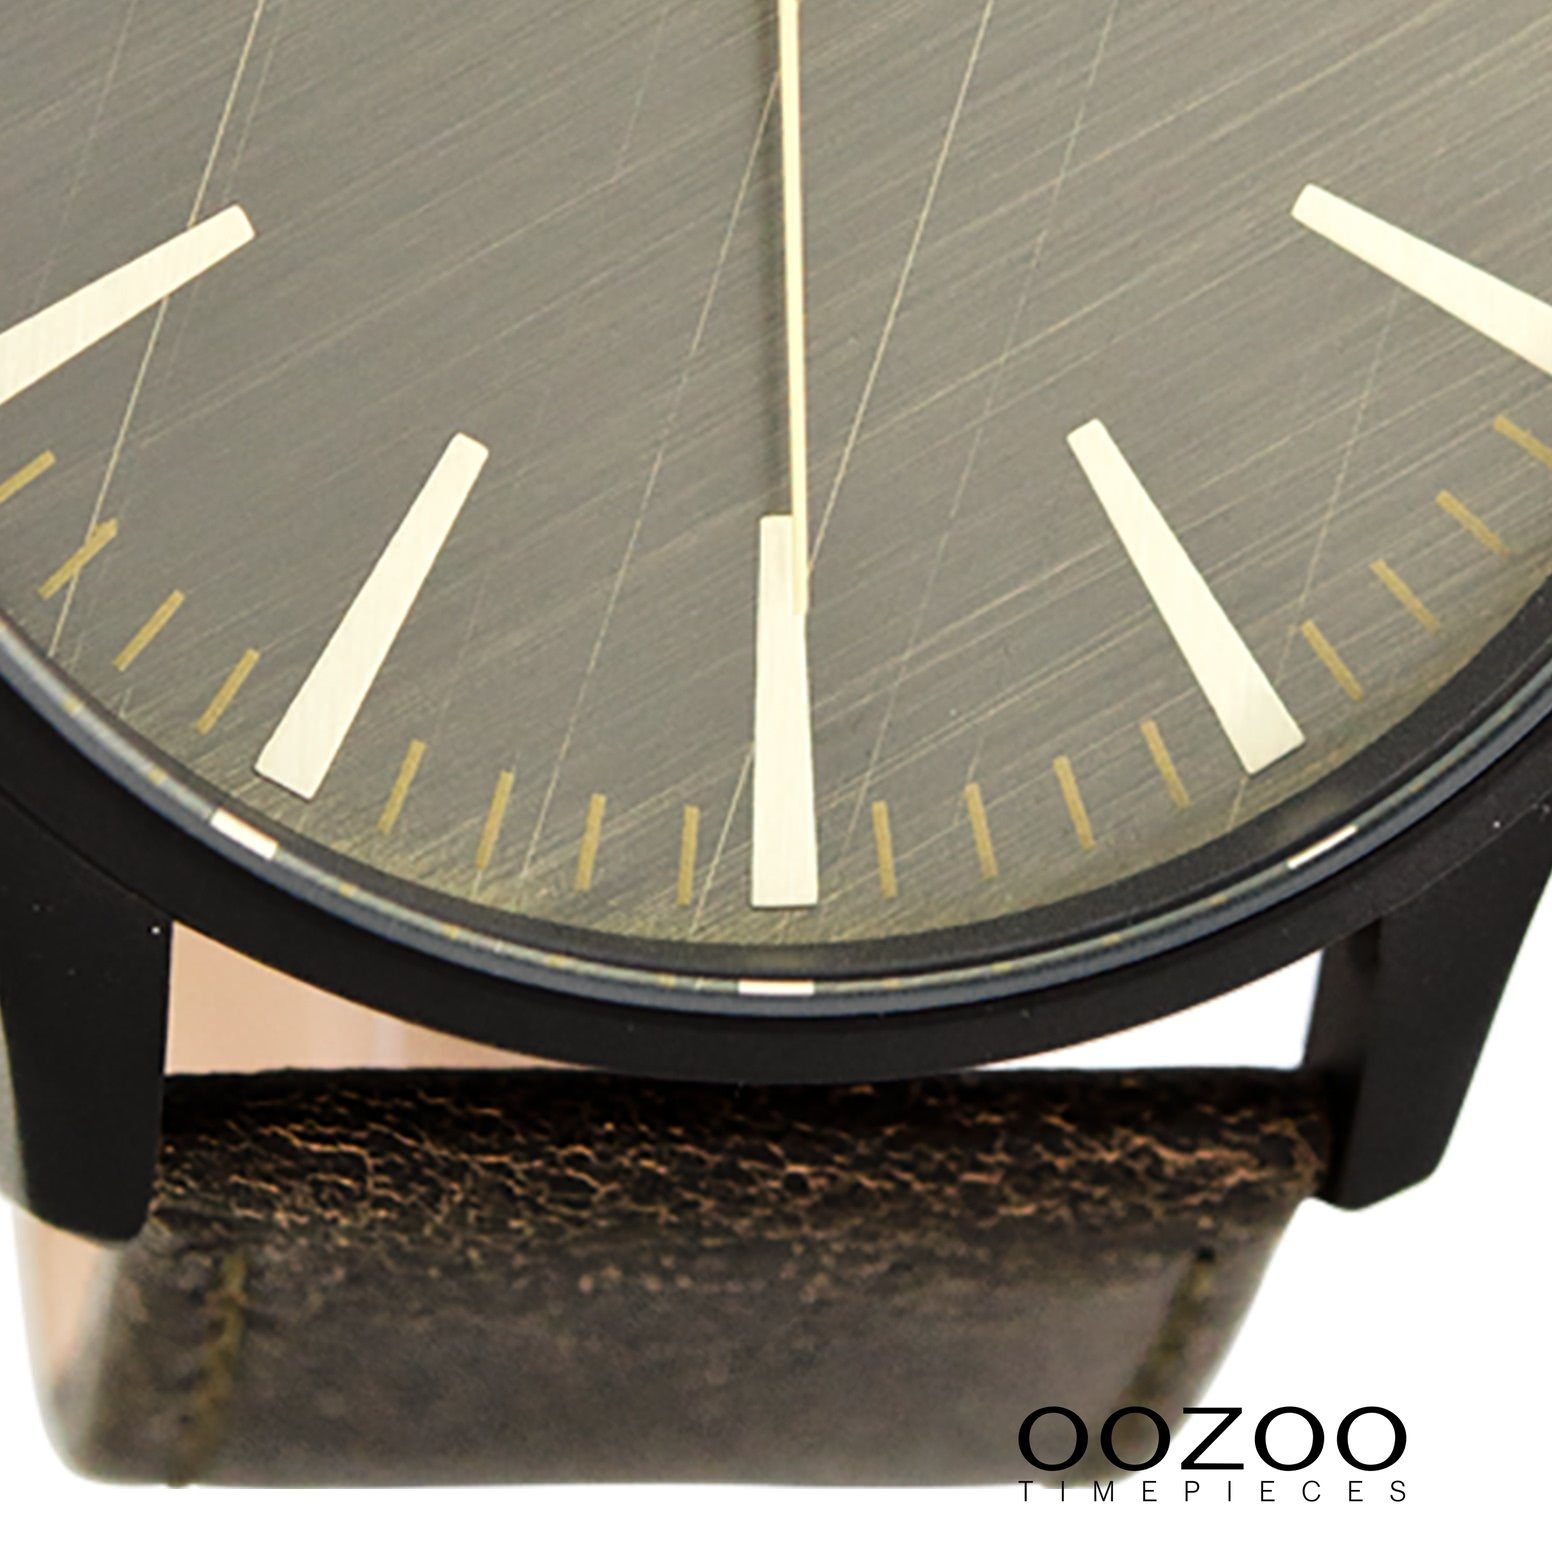 50mm) (ca. Herren Quarzuhr Fashion-Style Armbanduhr Herrenuhr rund, Oozoo schwarz, OOZOO groß extra Lederarmband,